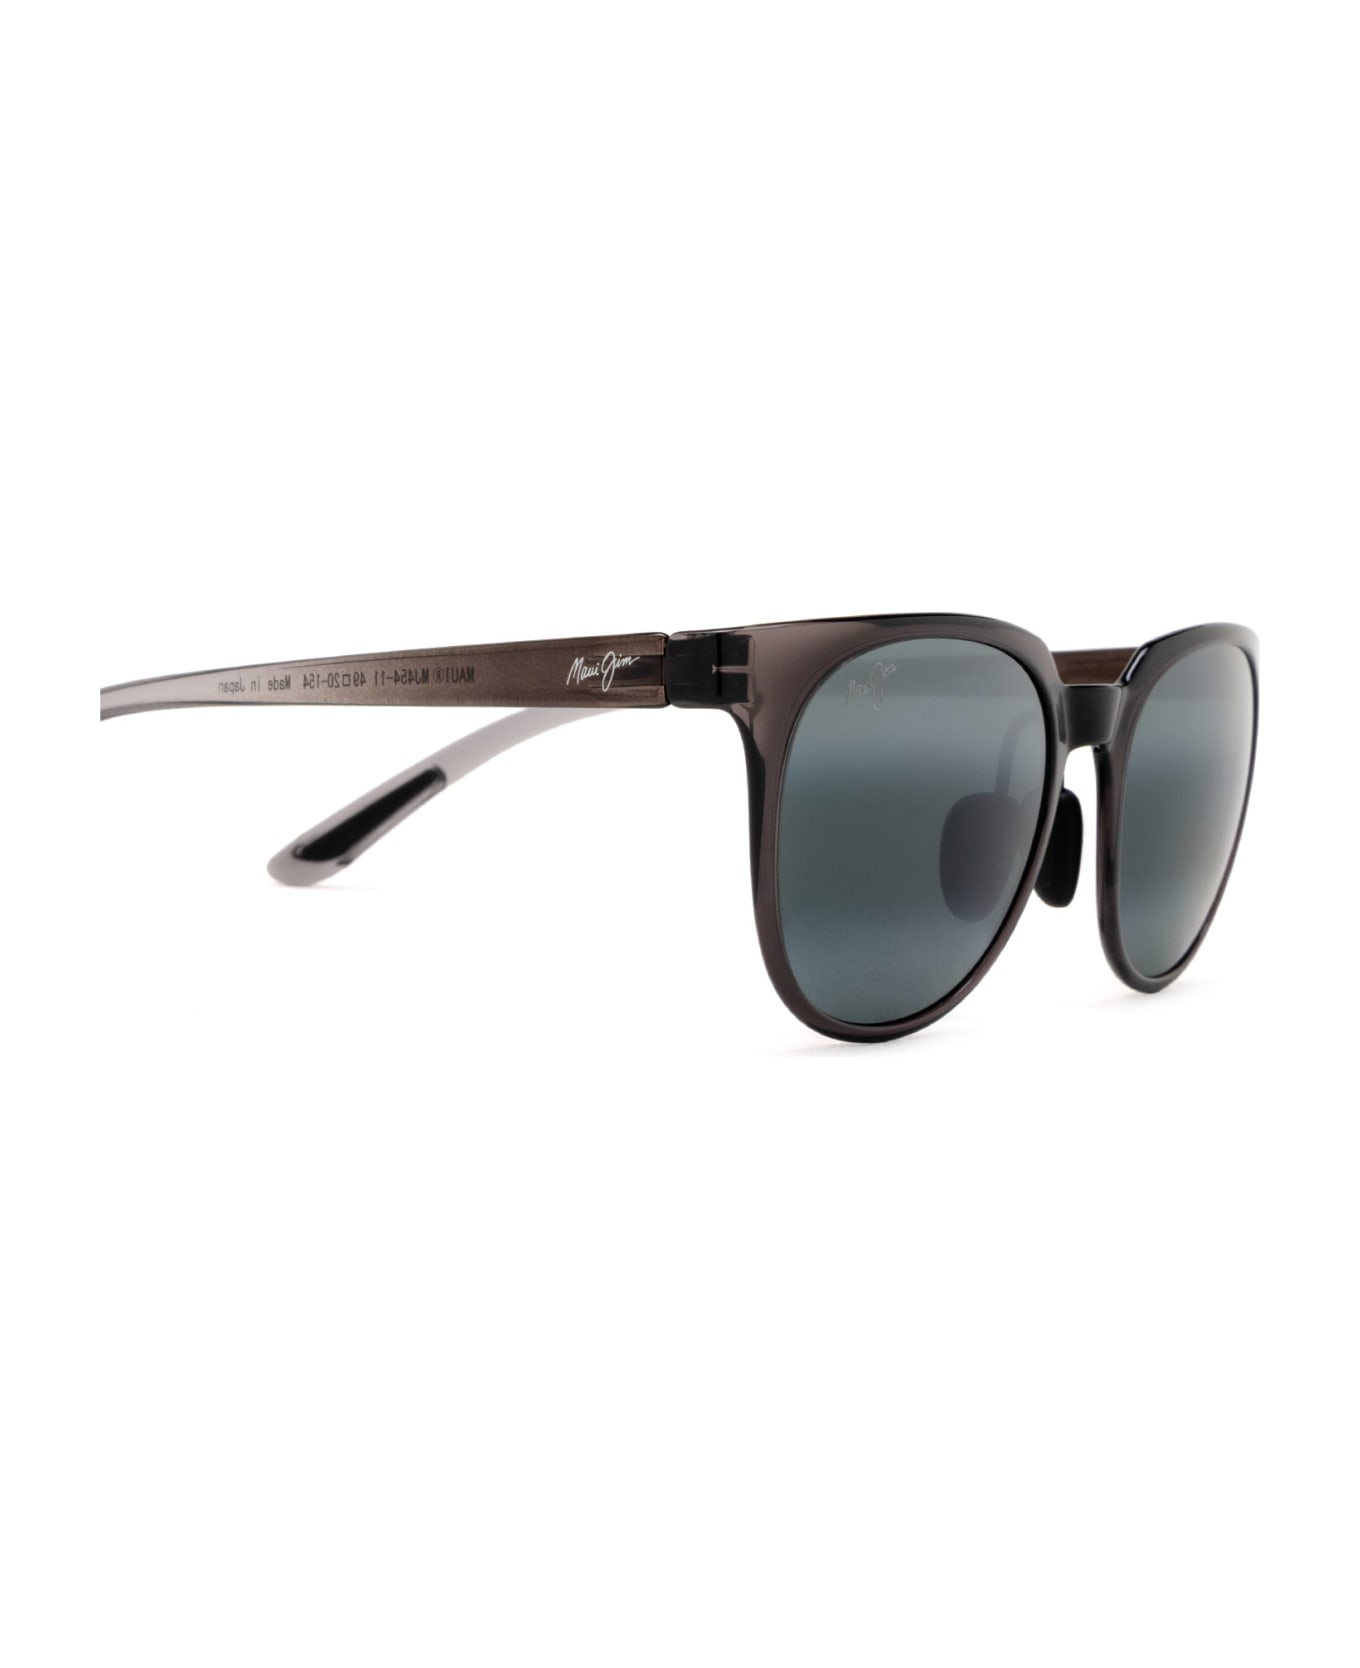 Maui Jim Mj454 Translucent Grey Sunglasses - Translucent Grey